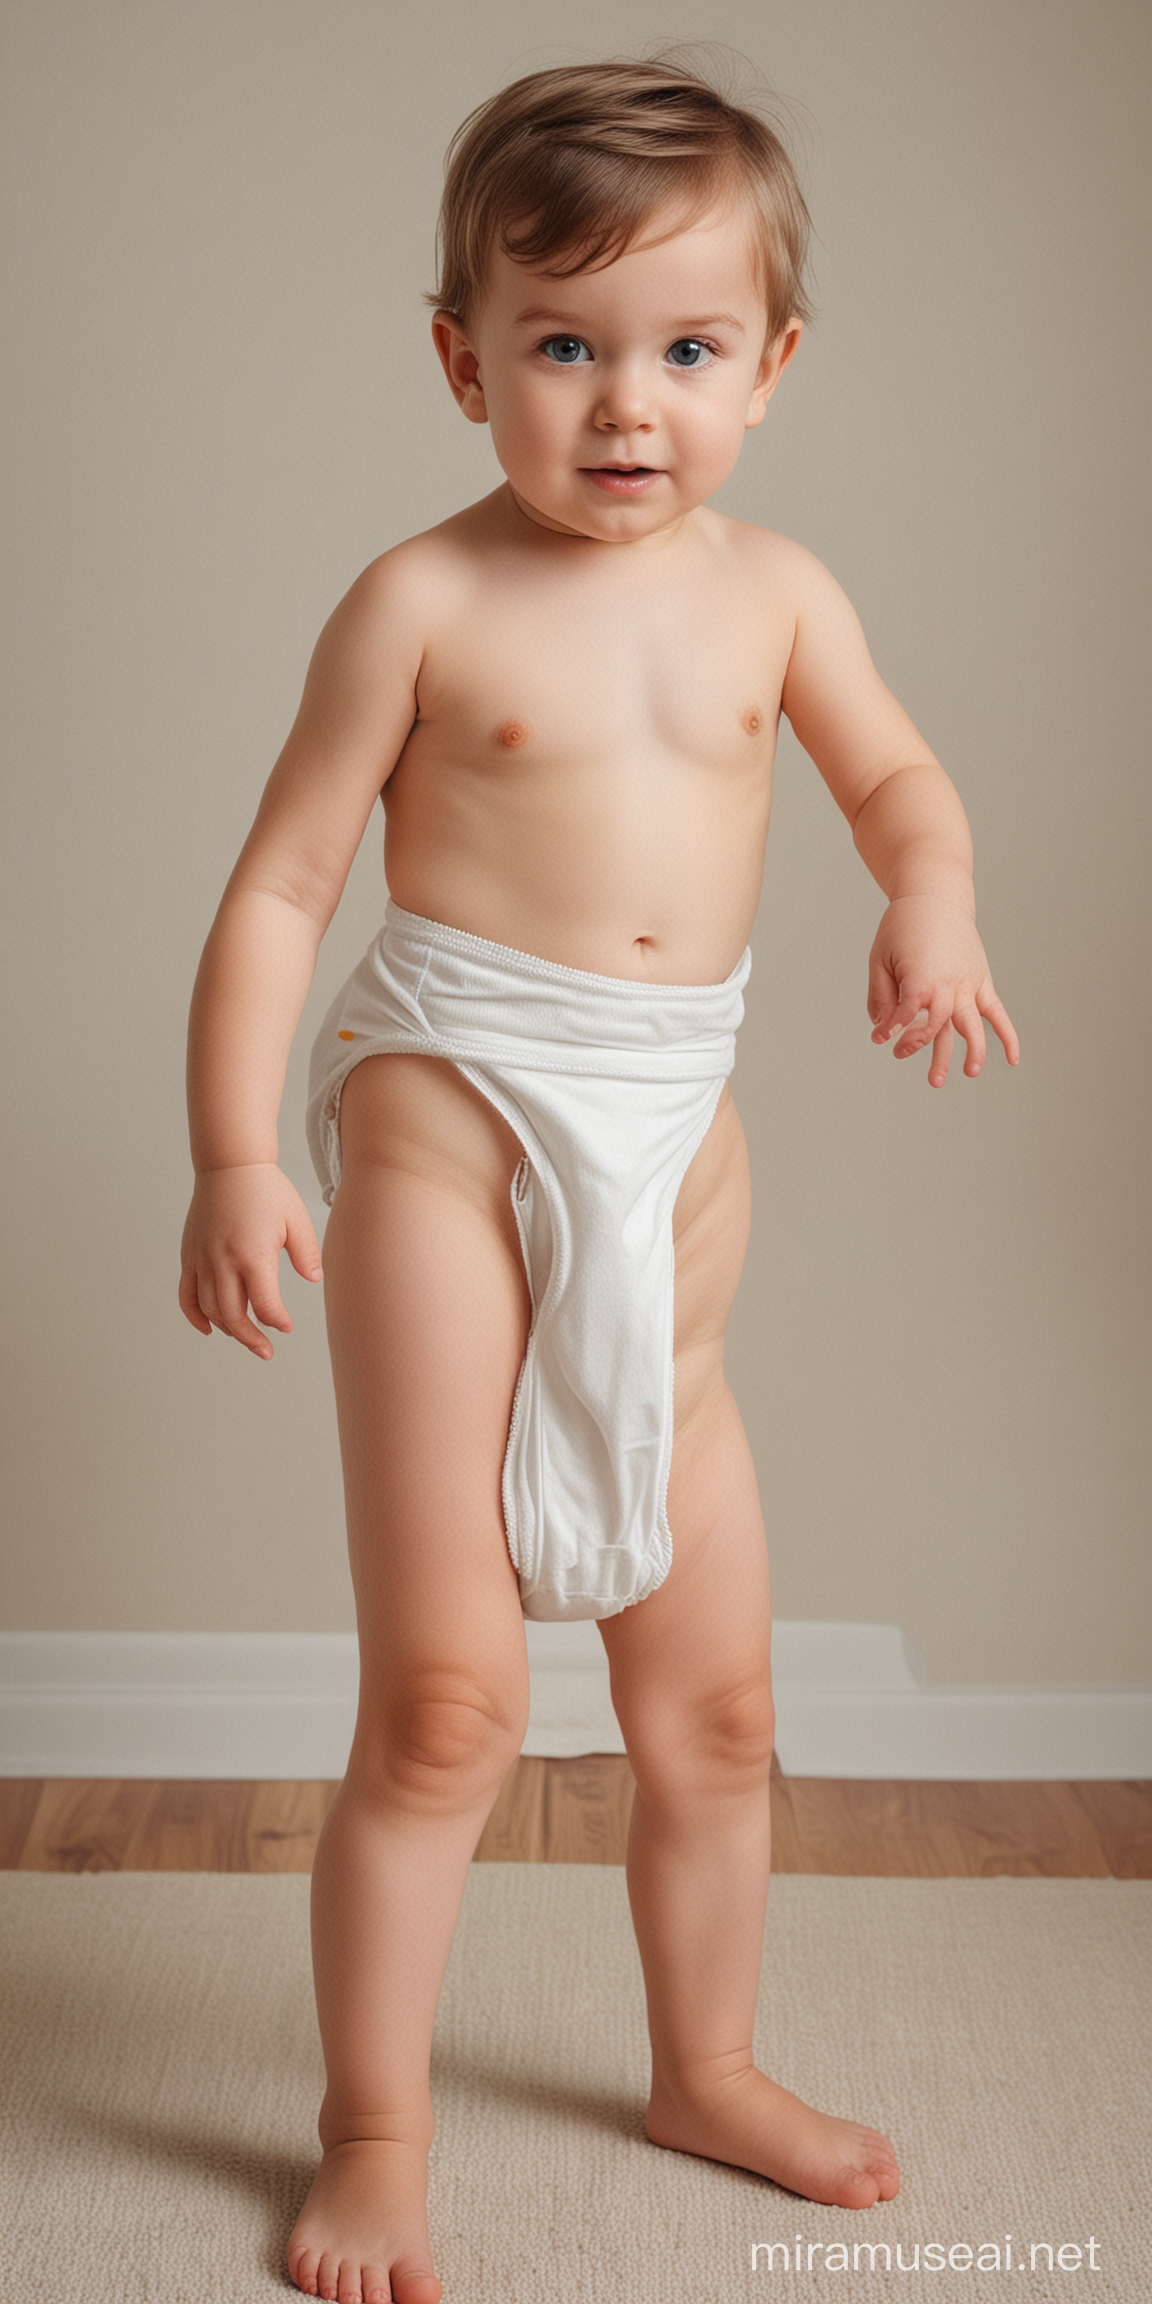 a child wearing a diaper